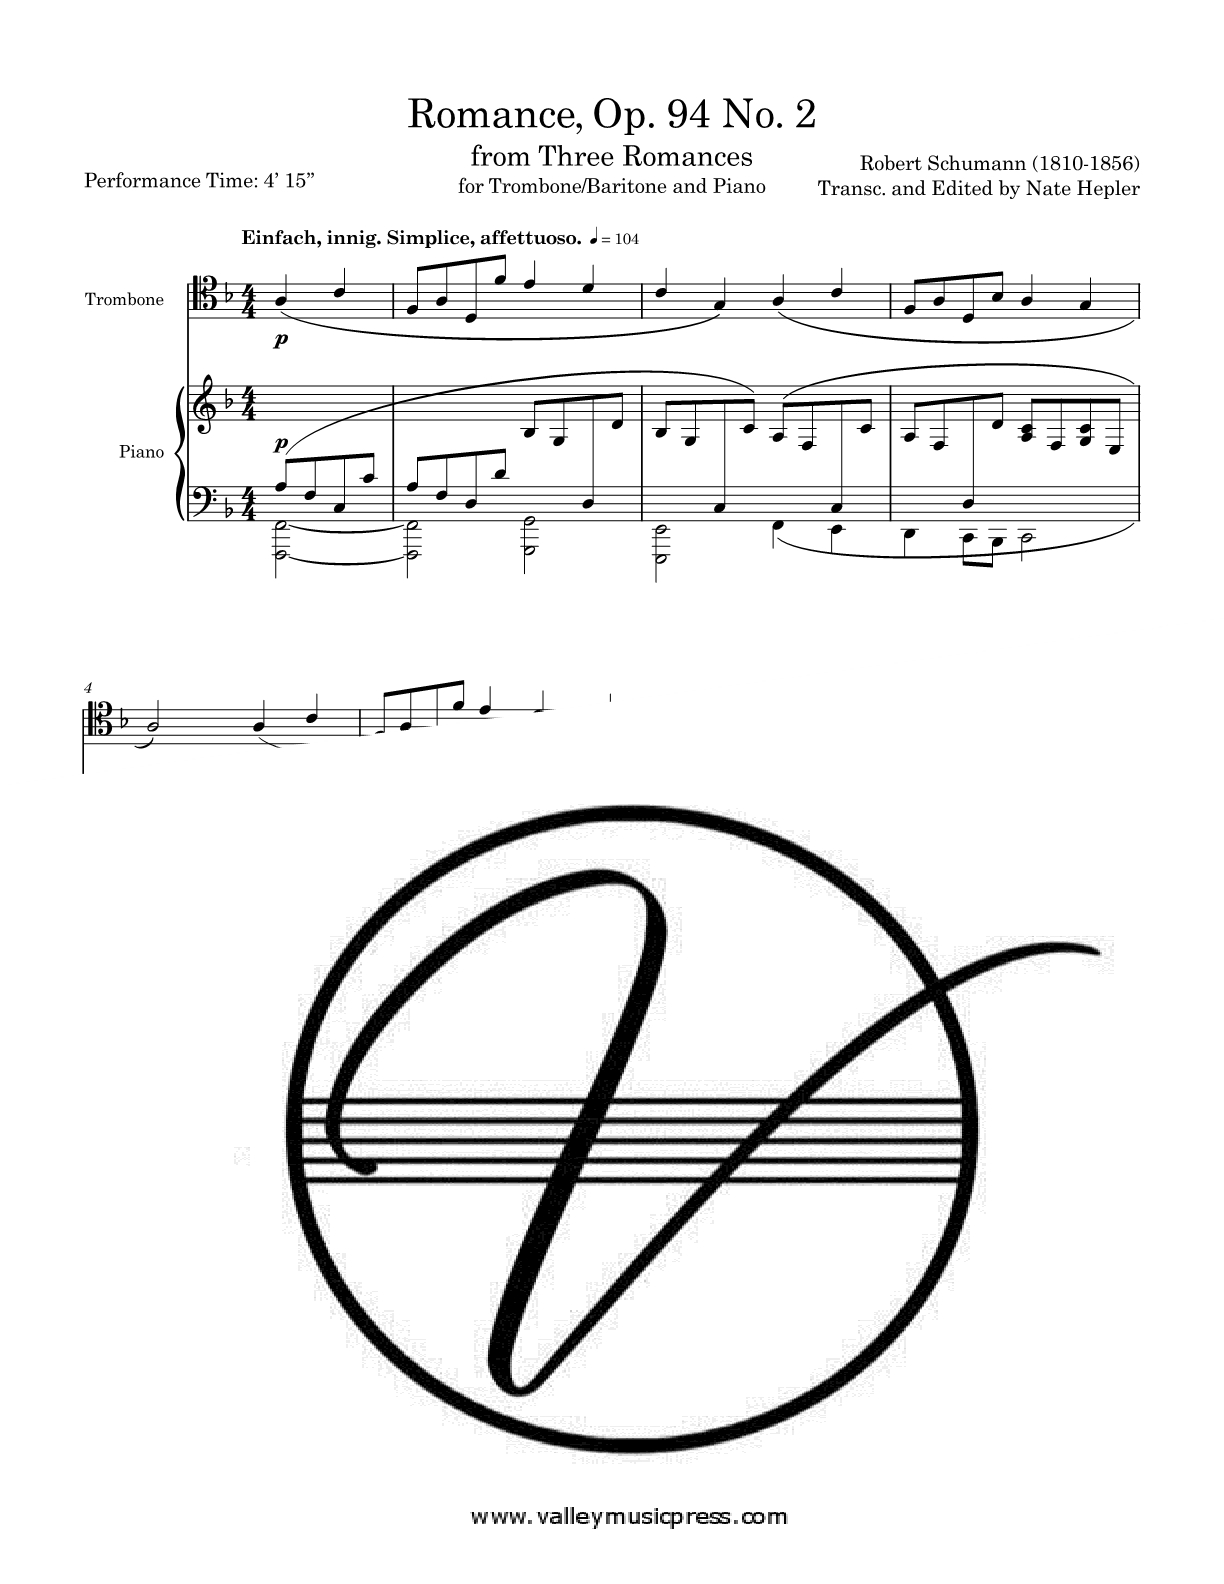 Schumann - Romance in A Major Op. 94 No. 2 (Trb & Piano)